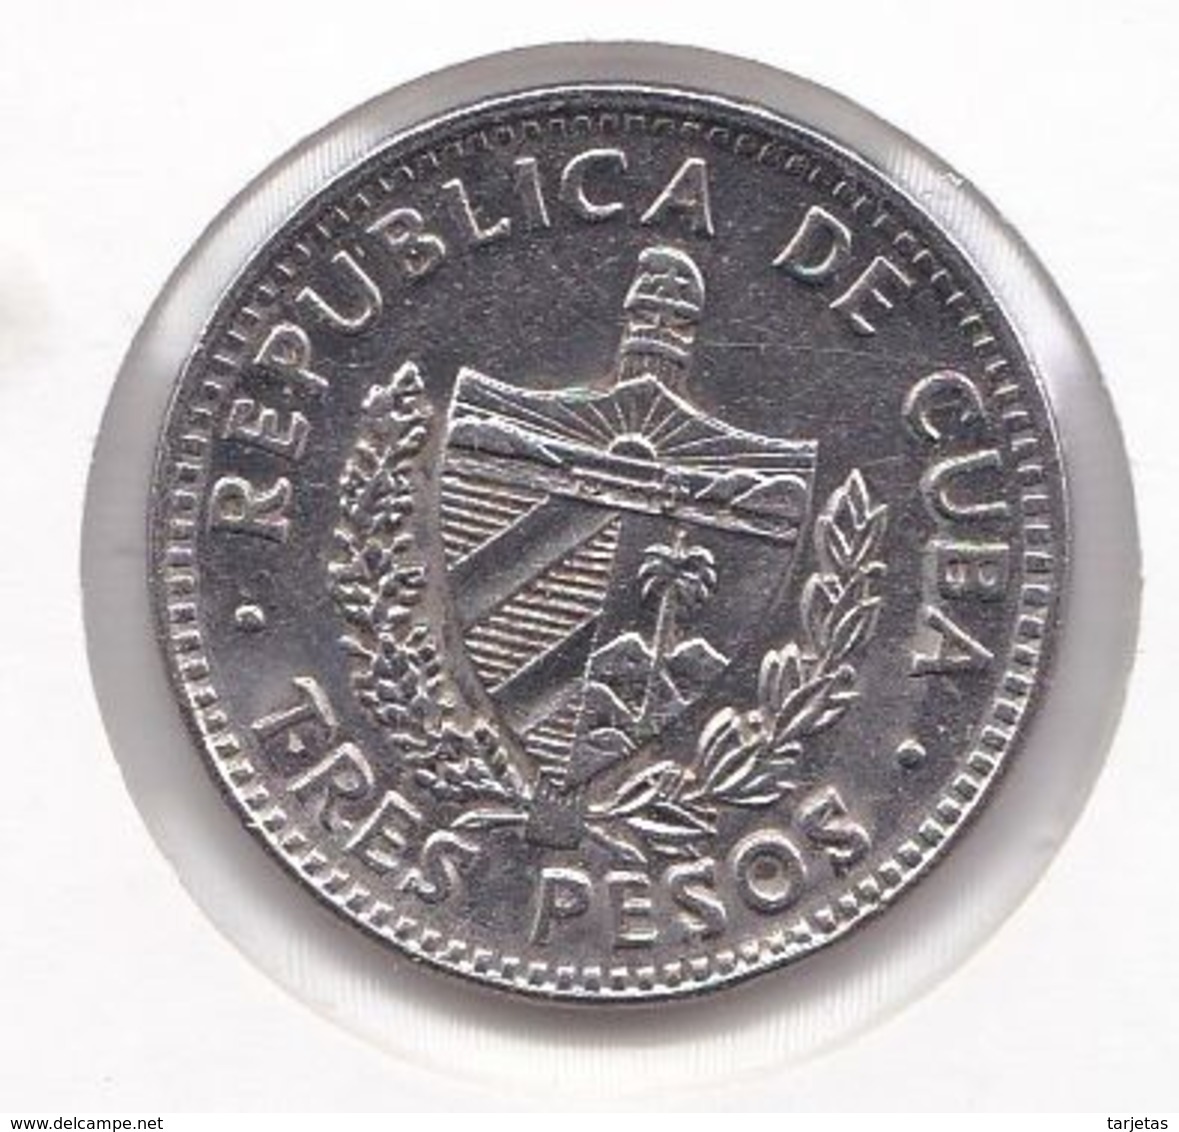 MONEDA DE CUBA DE 3 PESOS DEL AÑO 1995 DEL CHE GUEVARA (COIN) - Cuba